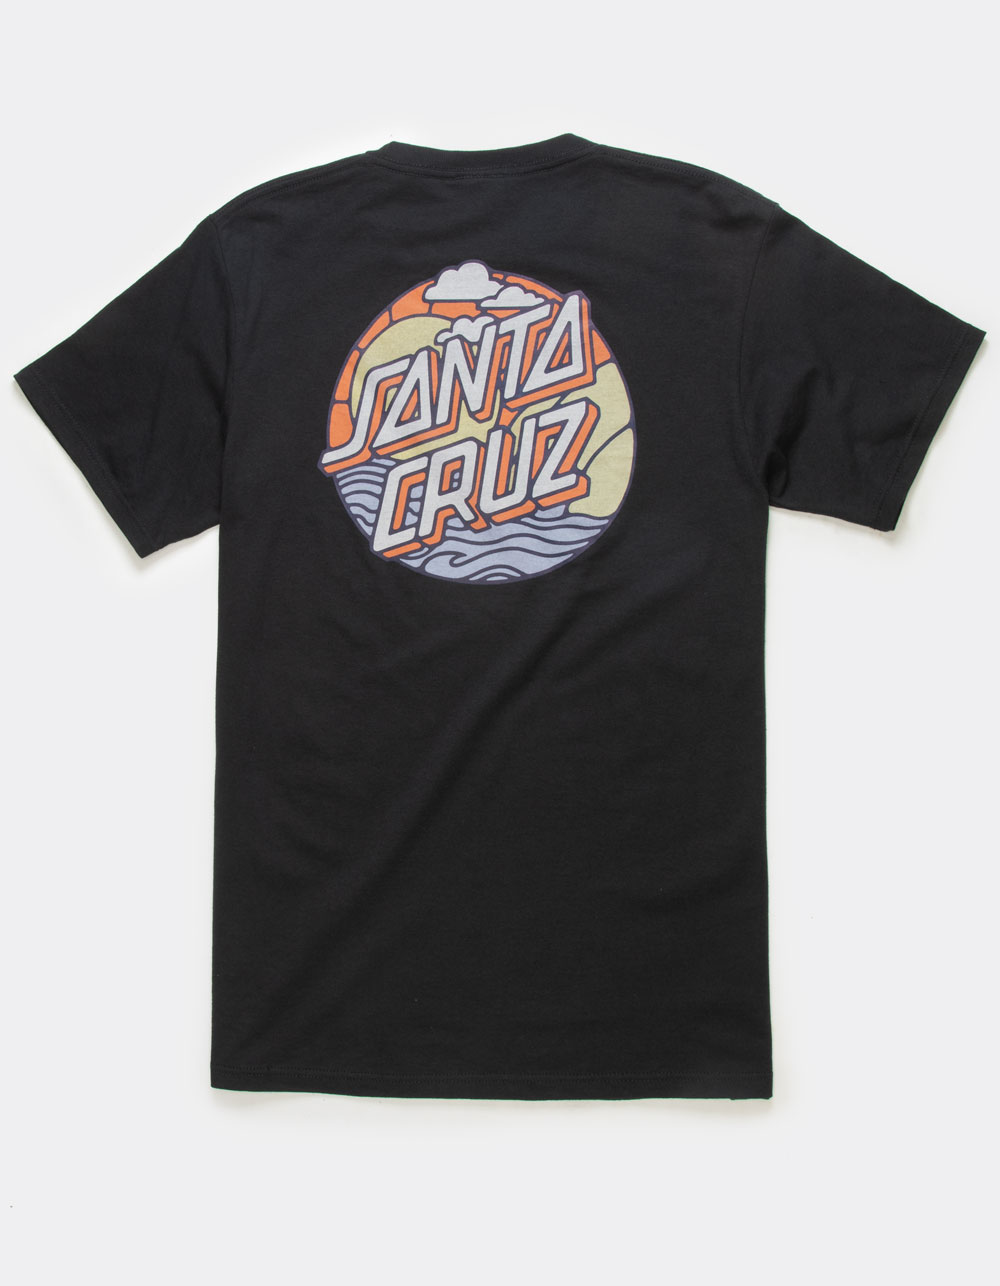 Santa Cruz Clothing: Santa Cruz Shirts & Hoodies | Tillys